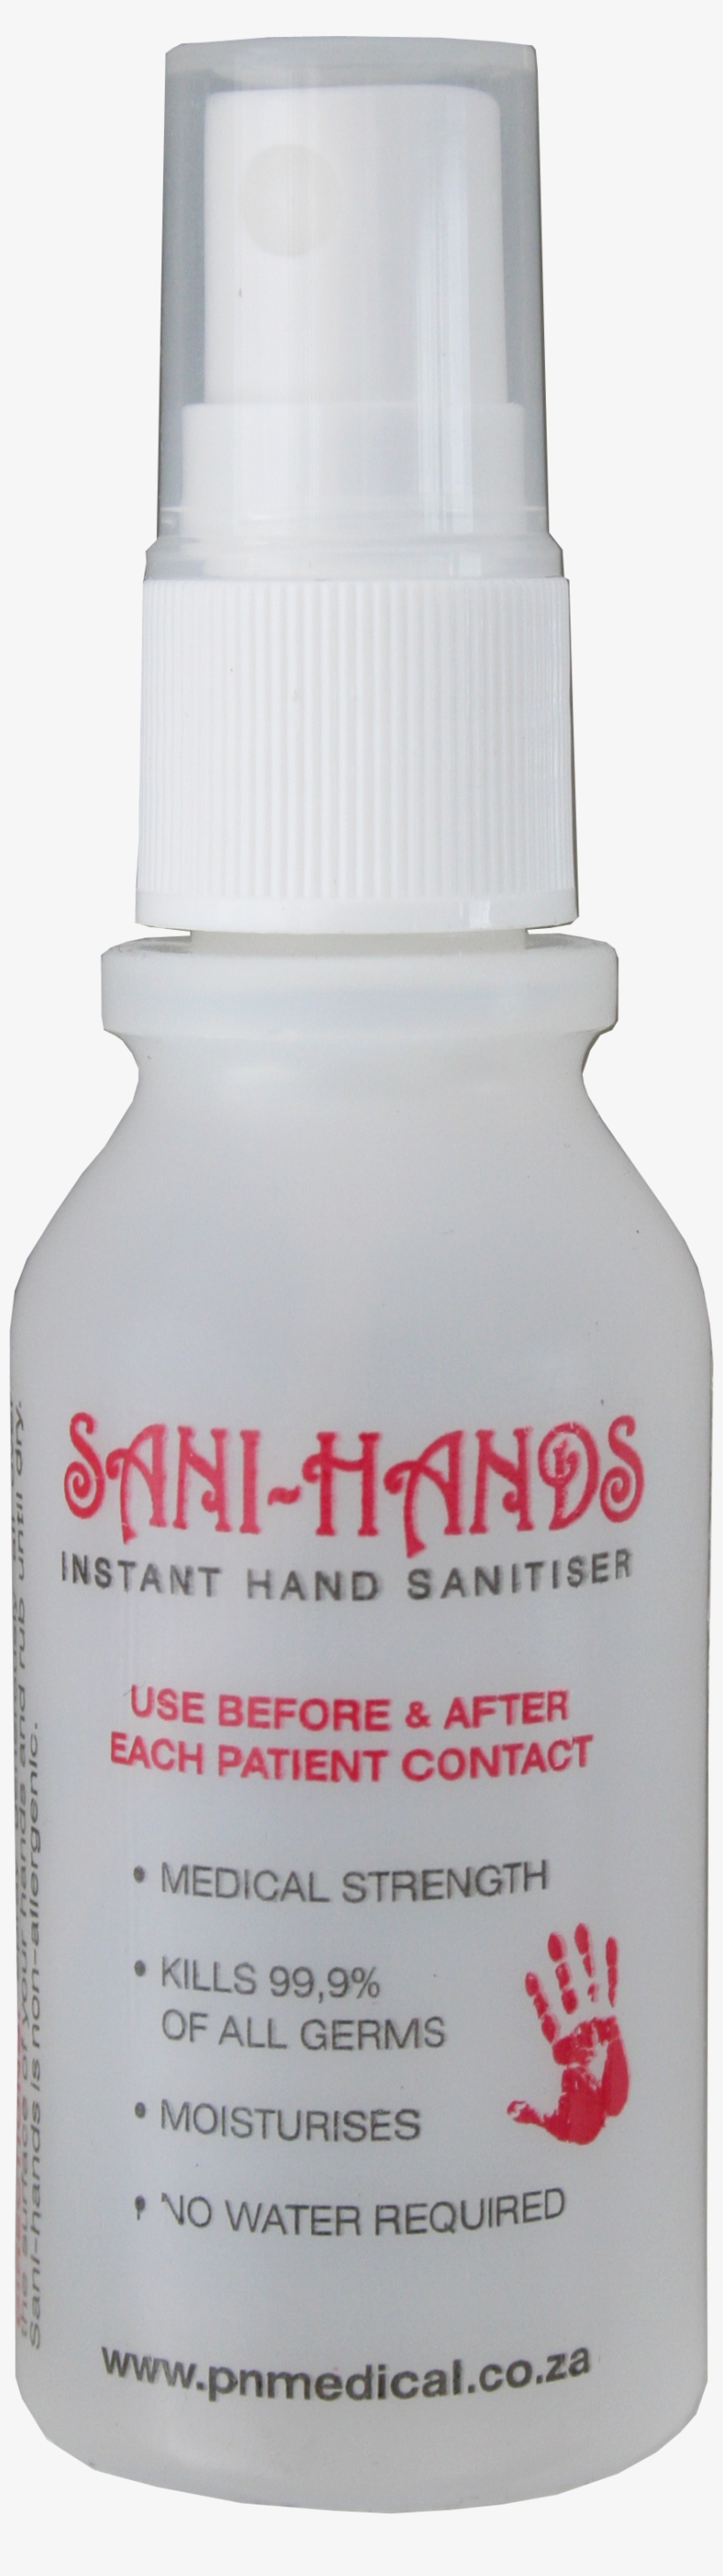 Sani-hands Hand Sanitiser Spray - Cosmetics, transparent png #8435065